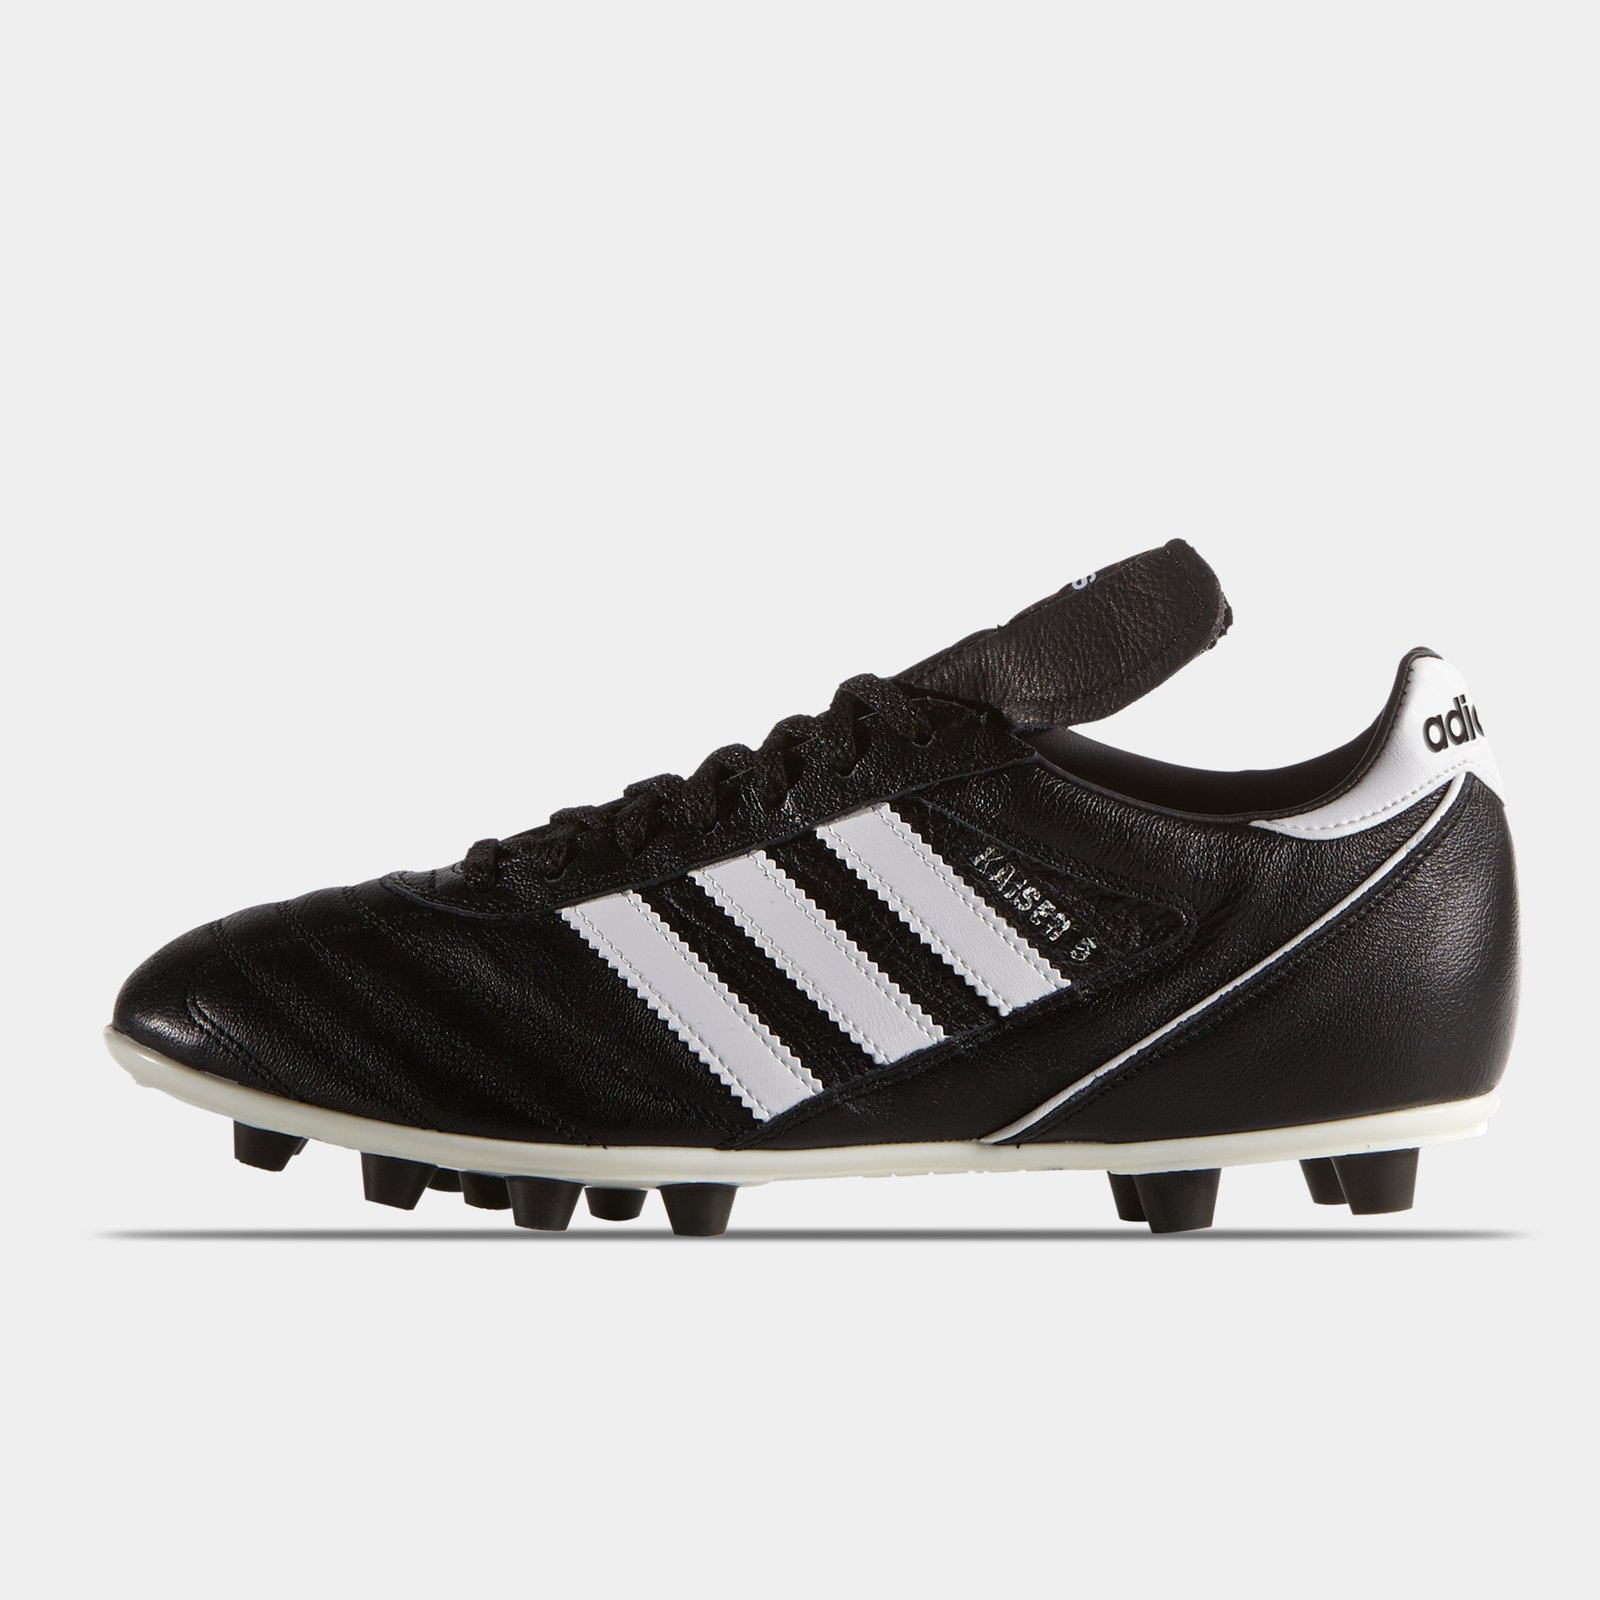 Classic adidas Football Boots - Lovell Soccer